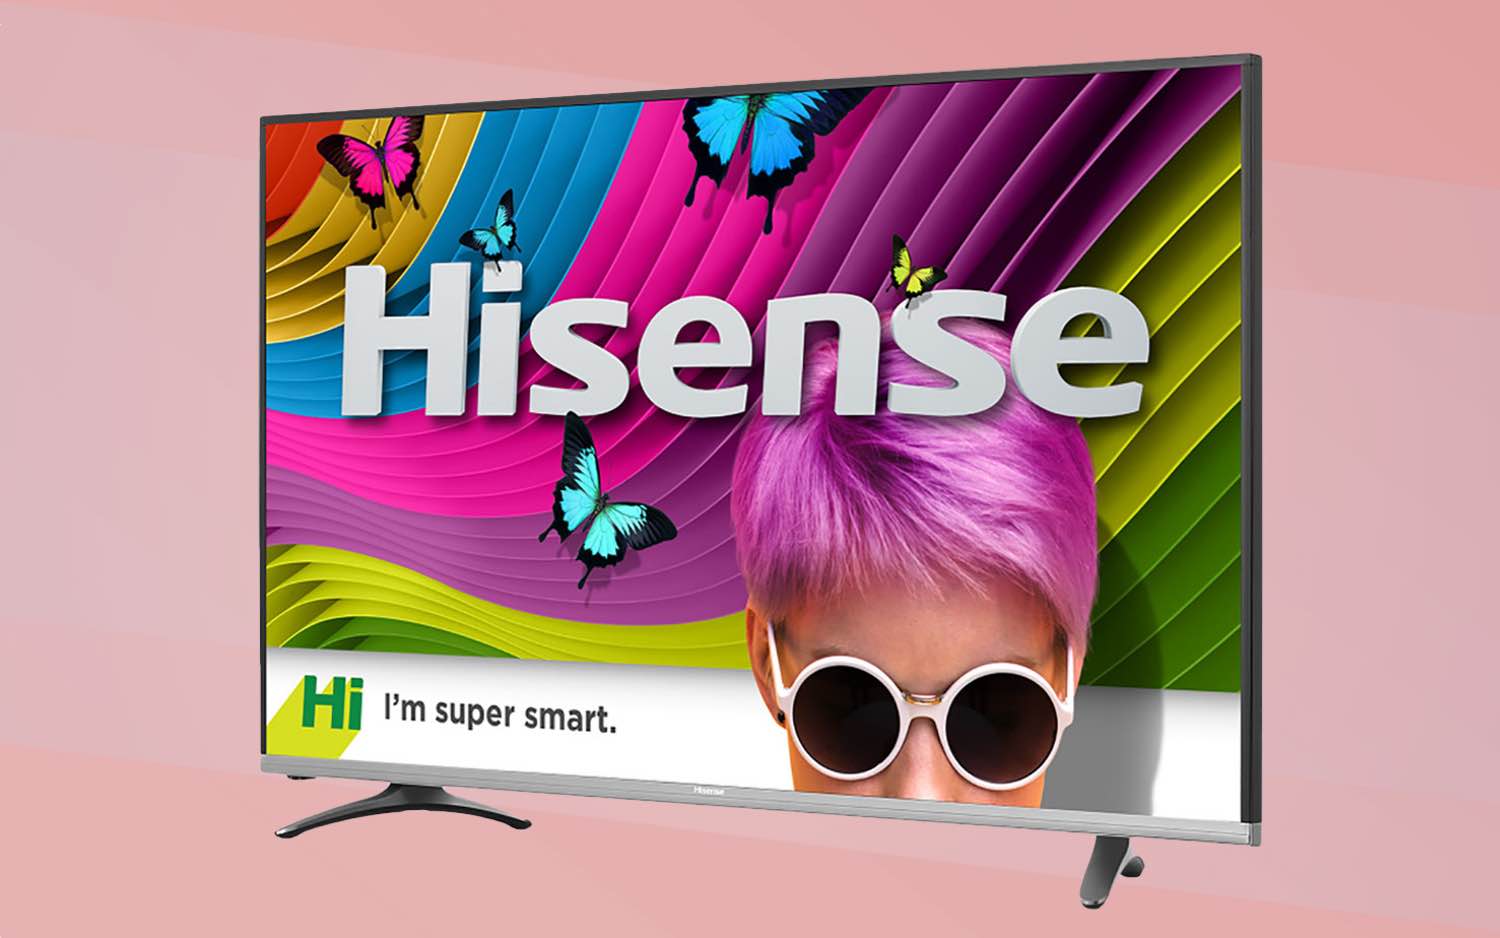 Hisense 50 In. A6 Series 4k Ultra Hd Smart Google Tv 50a6h8, Tvs, Electronics